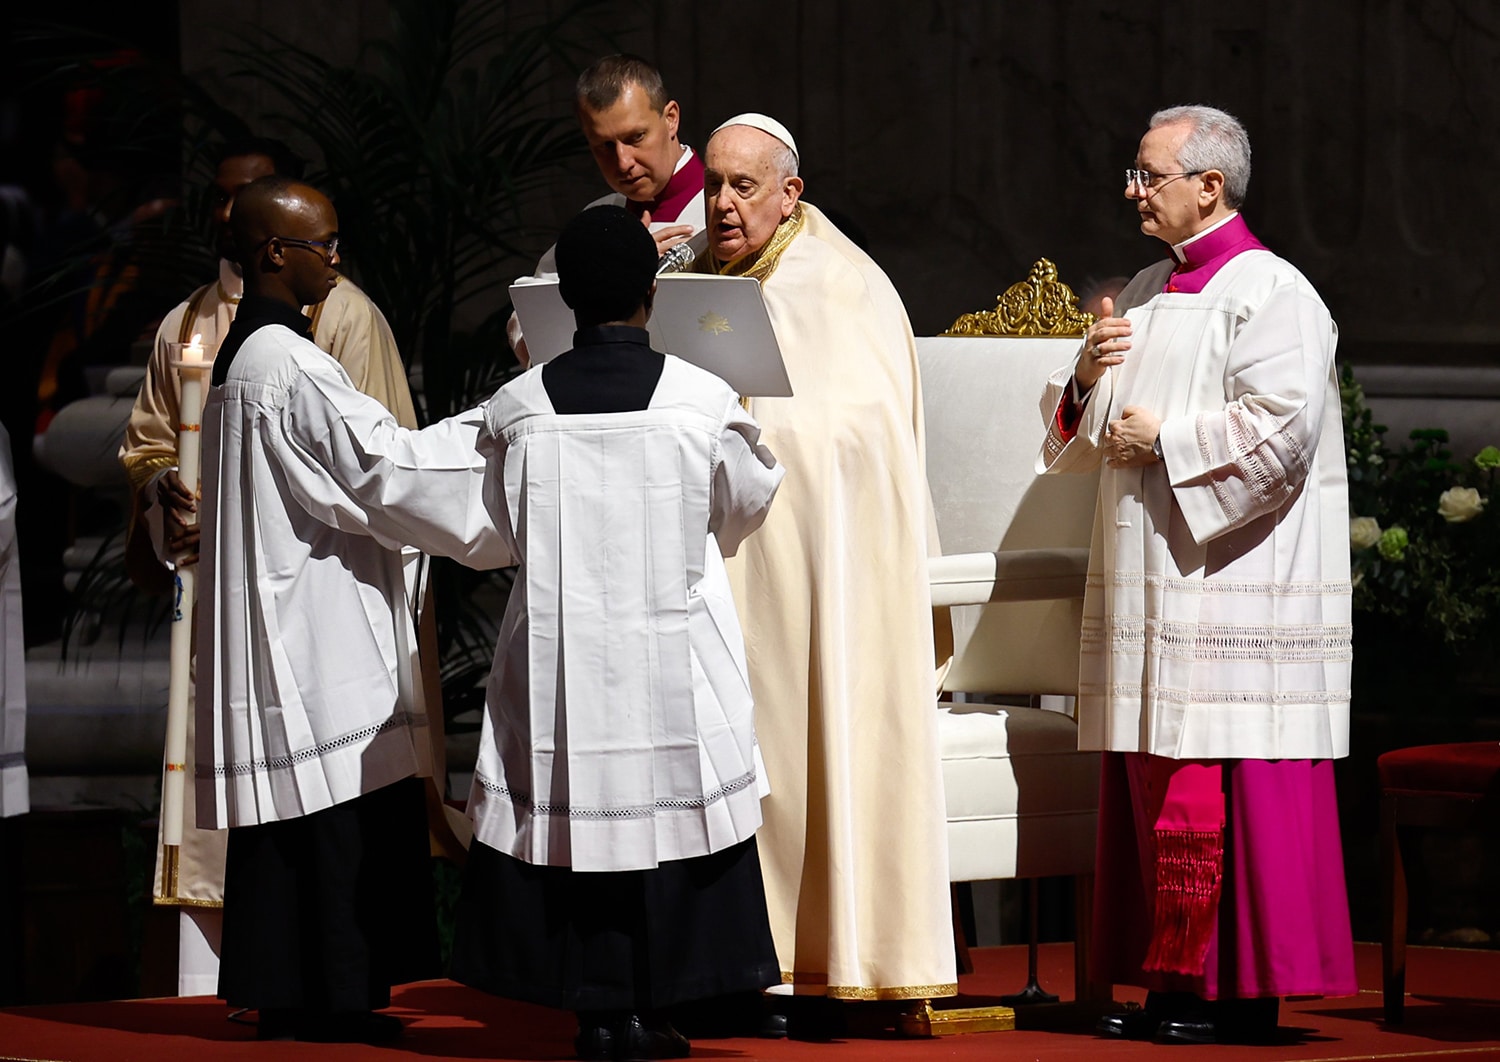 POPE FRANCIS FEAST OF PRESENTATION